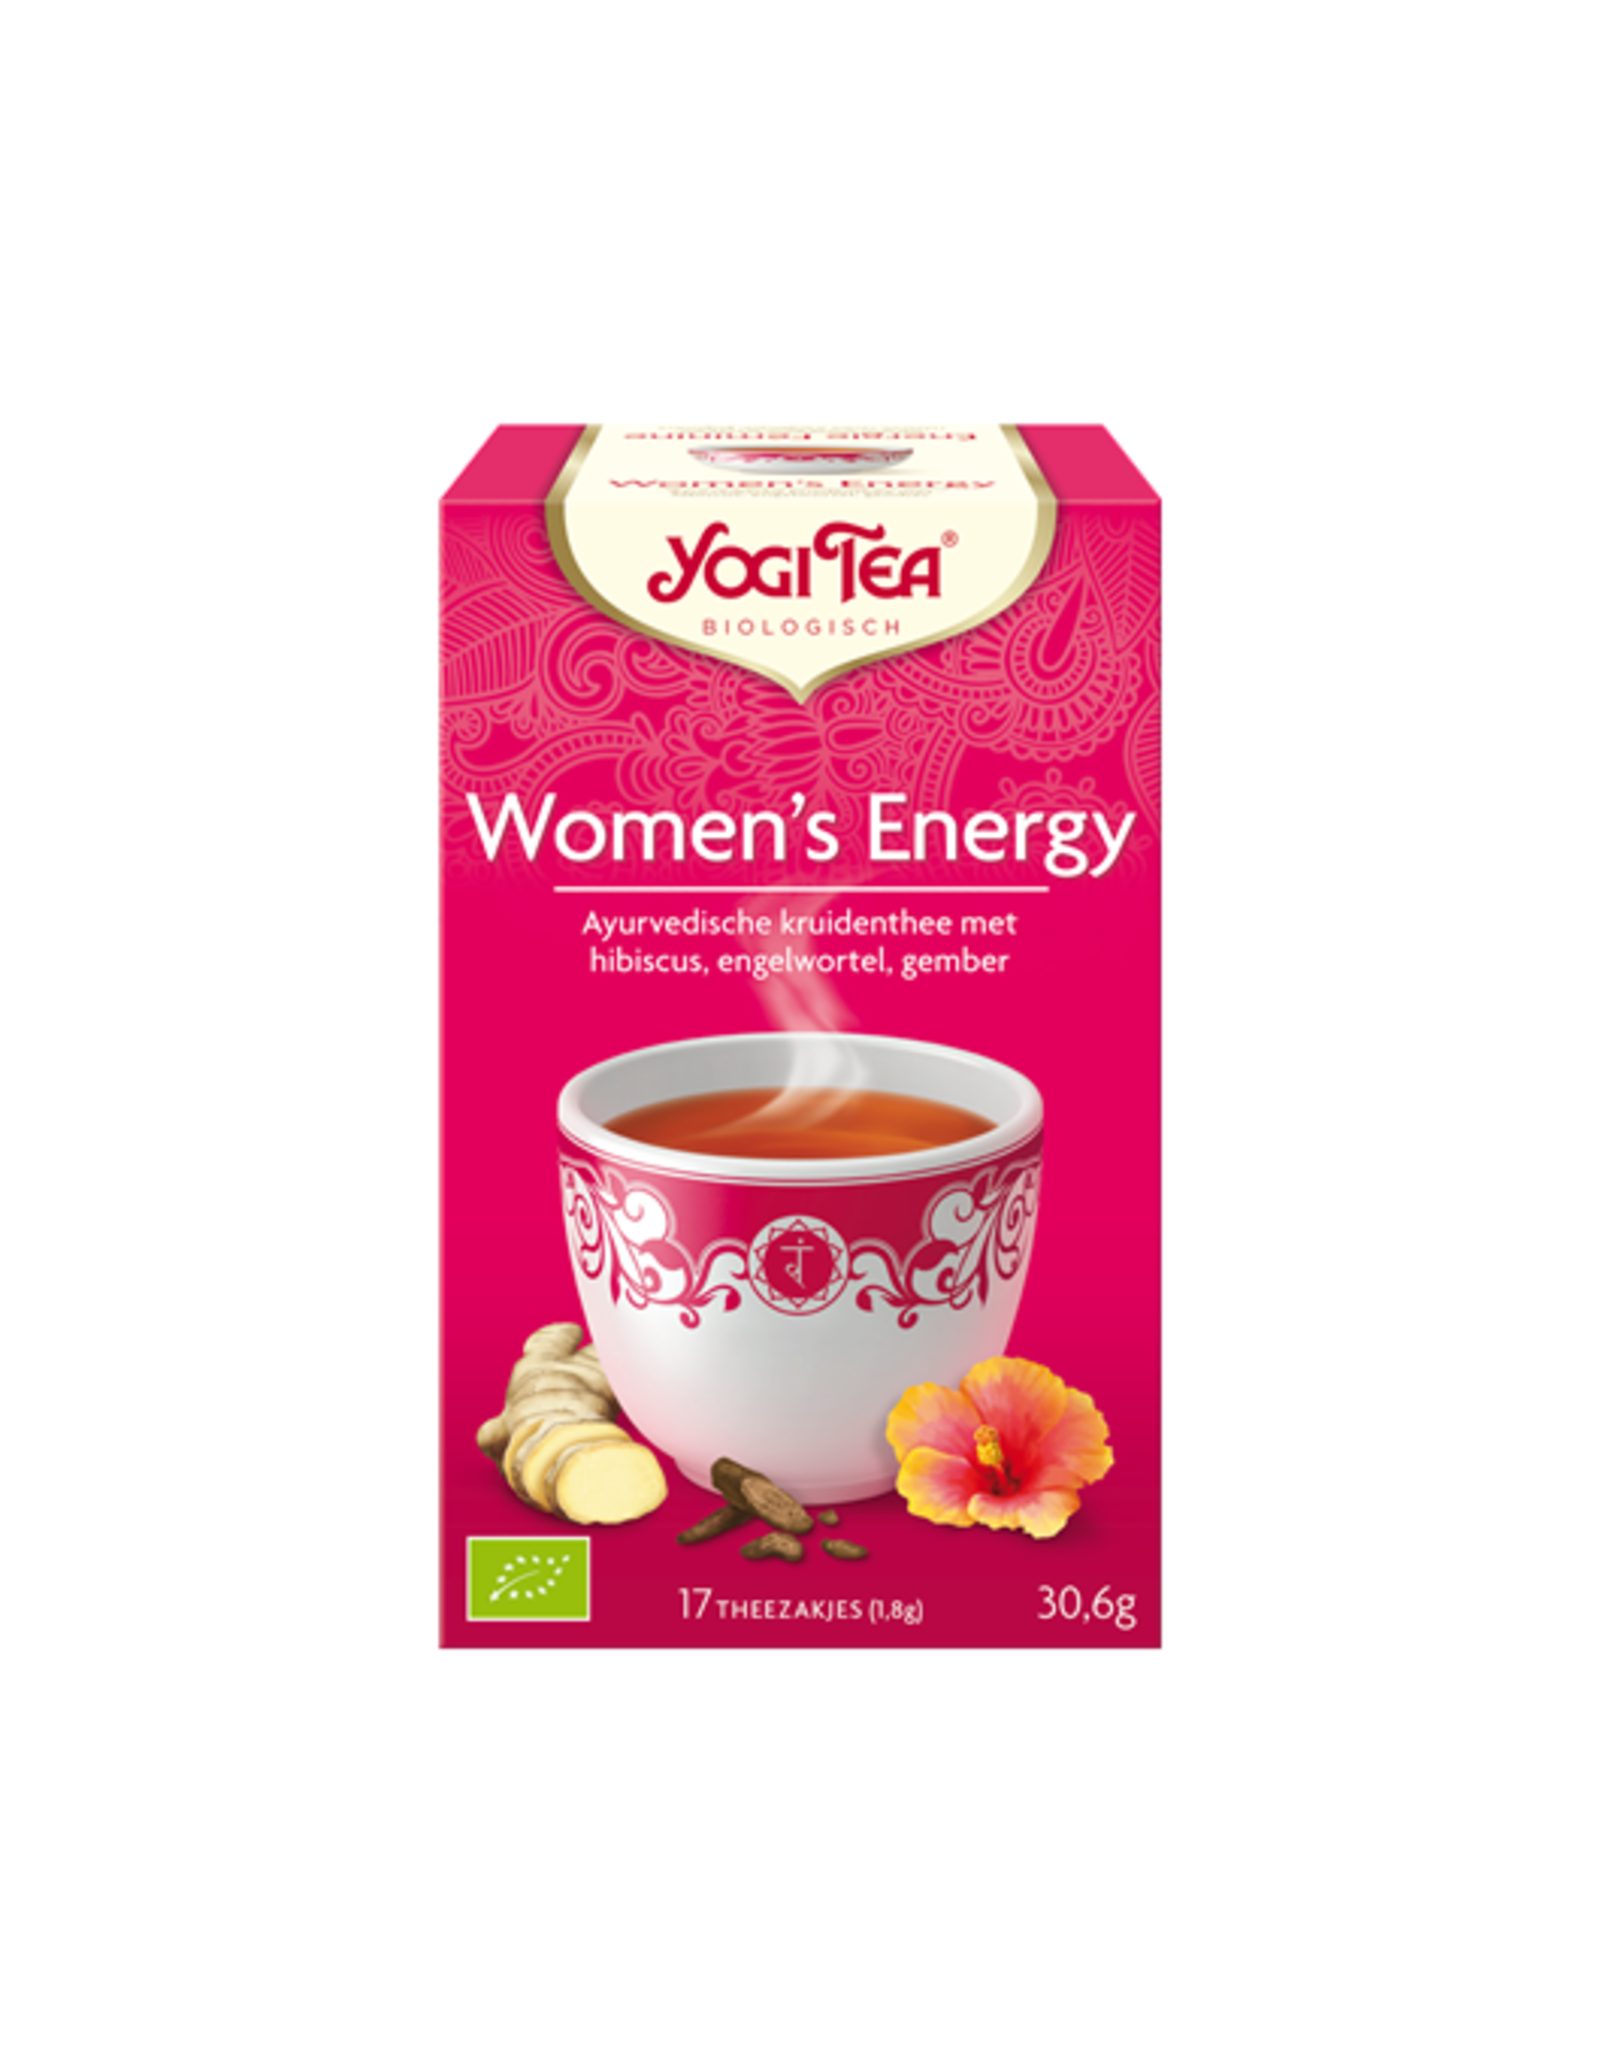 Yogi Tea Women's Energy